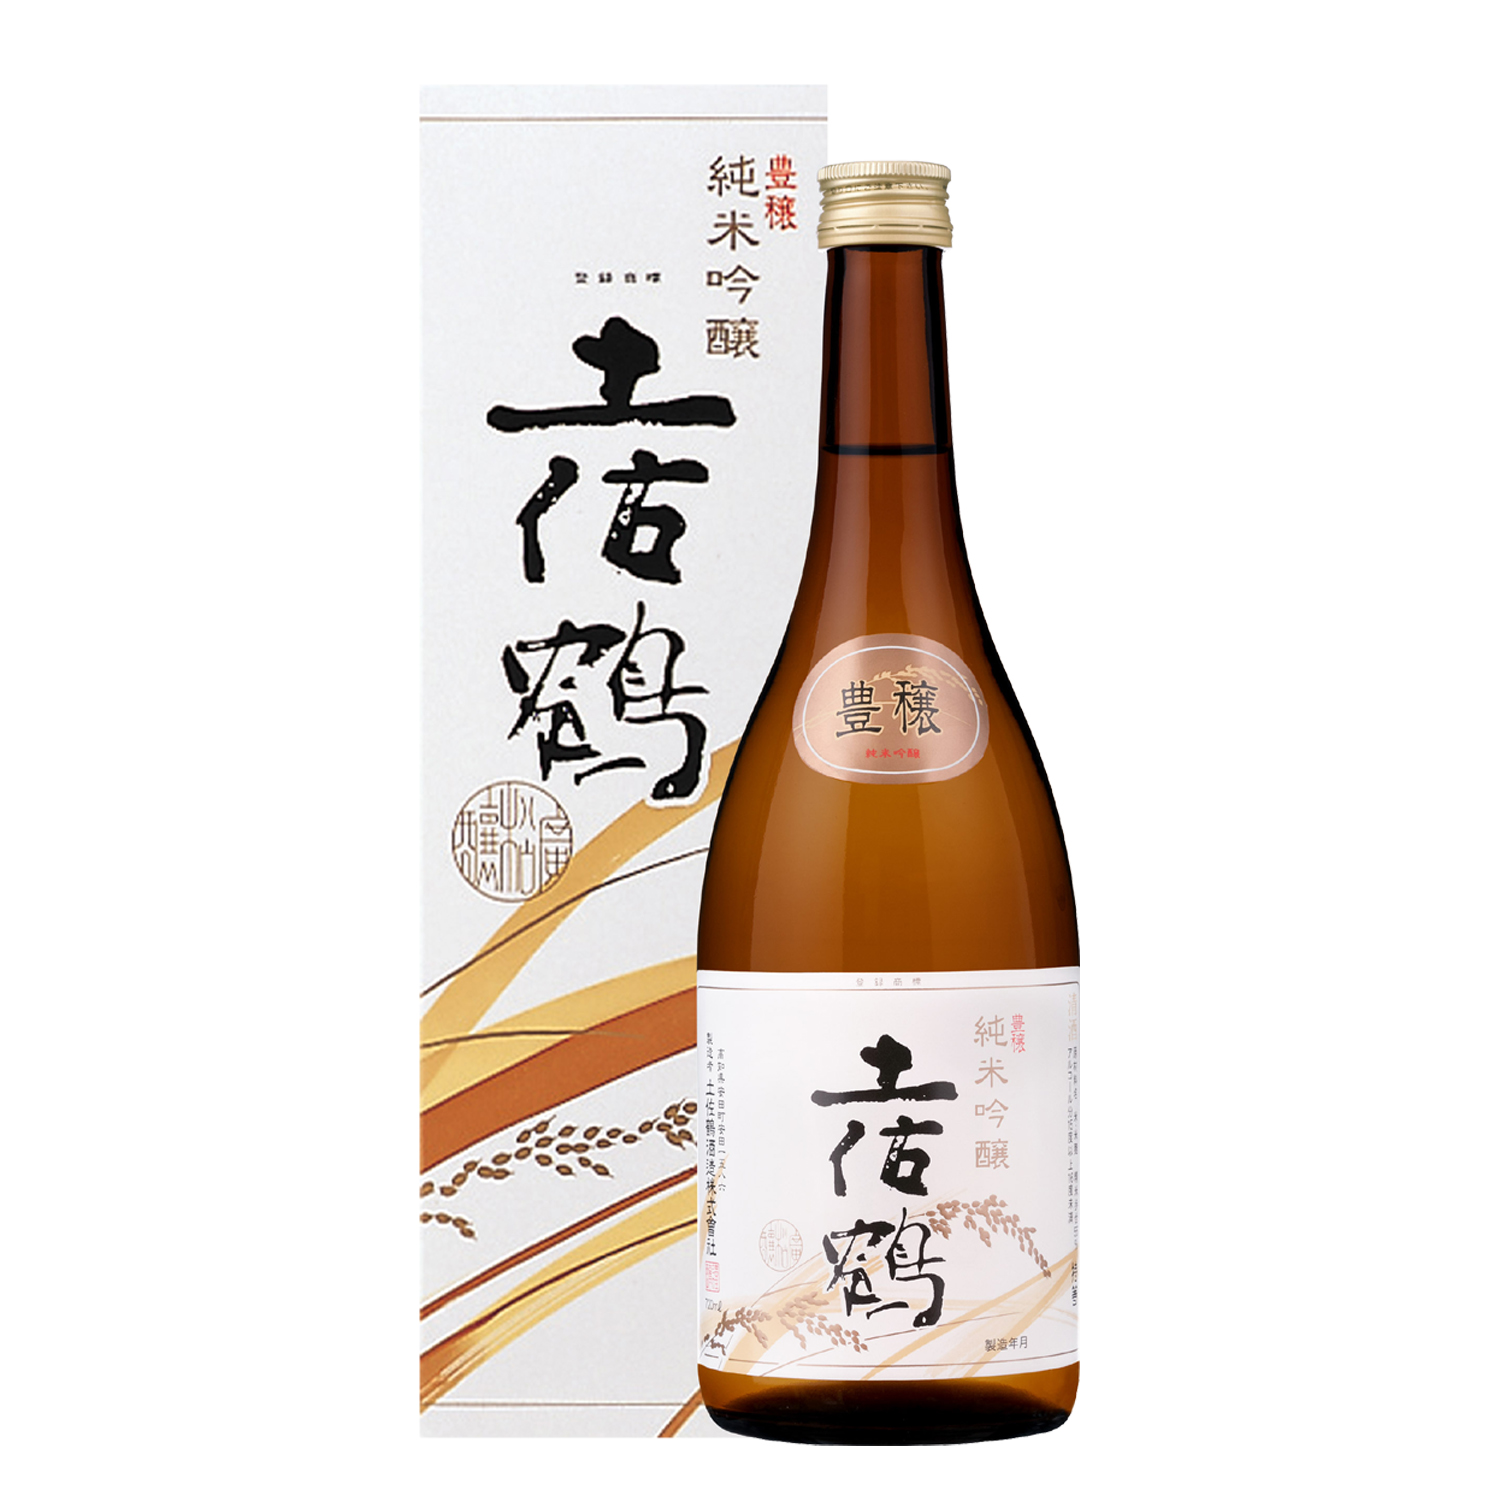 土佐鶴酒造の純米吟醸酒